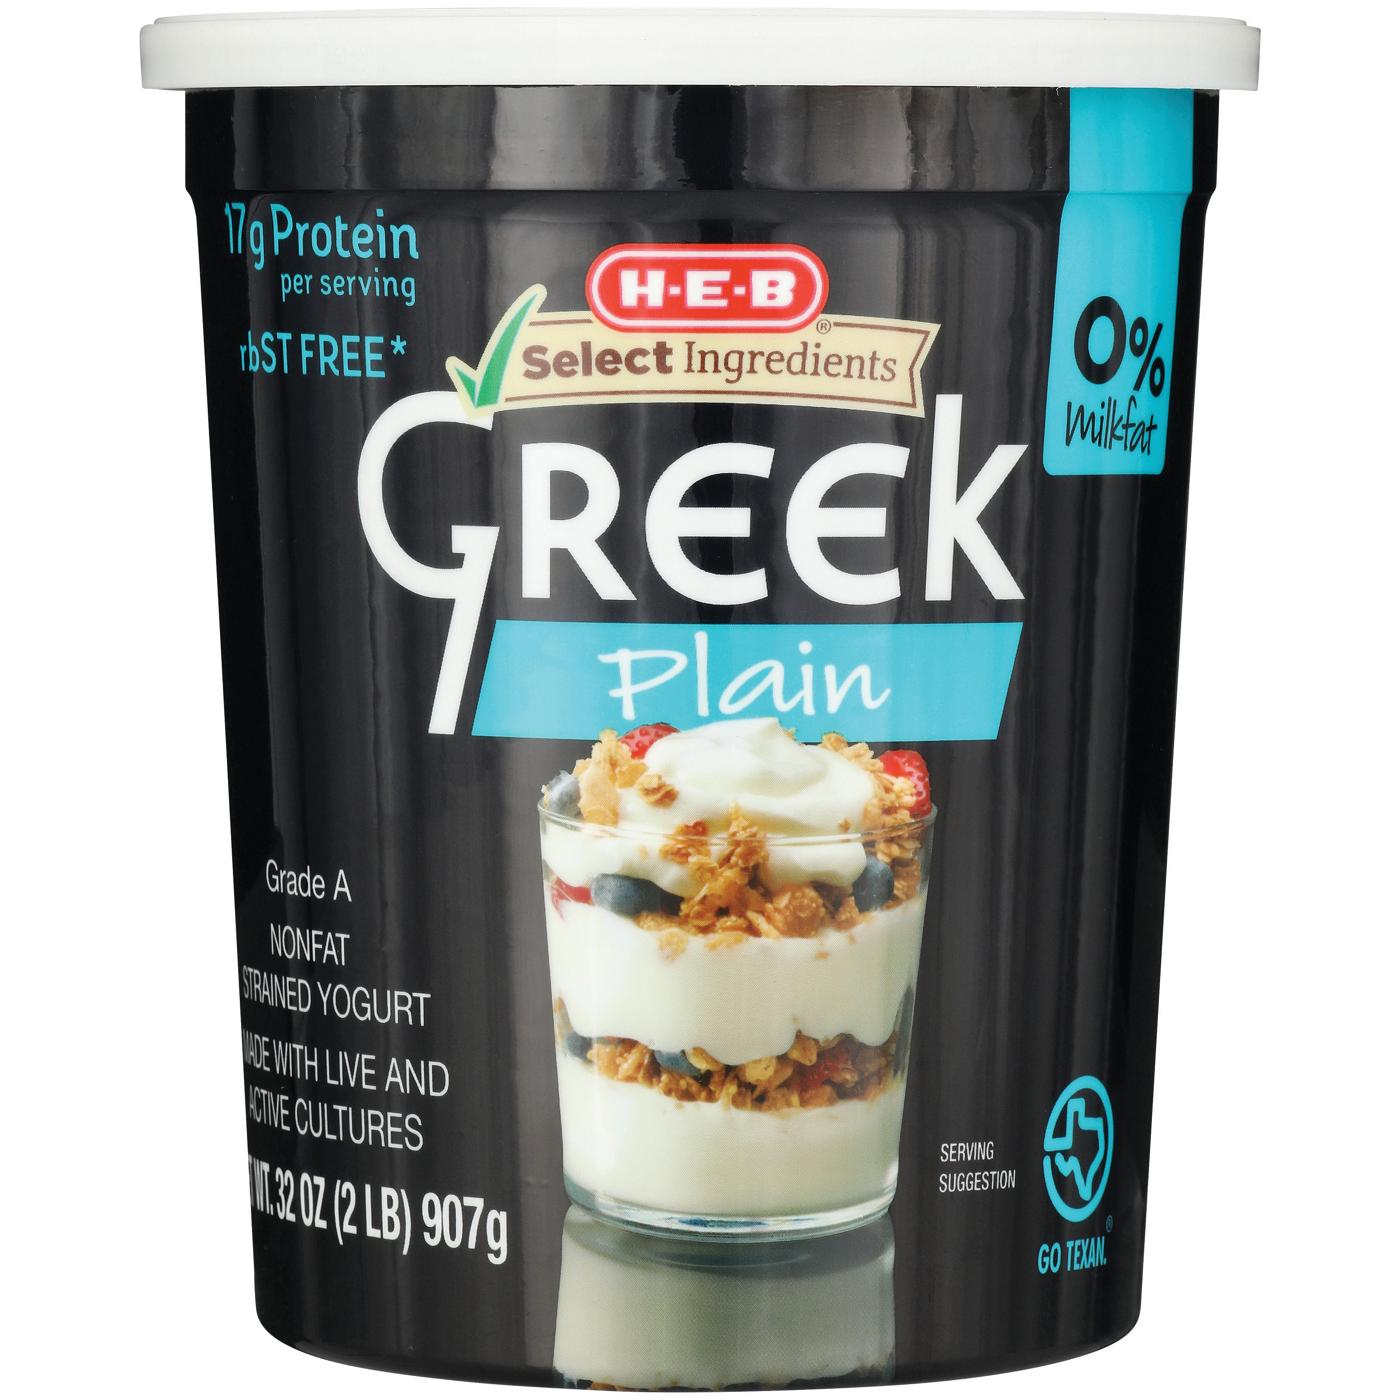 H-E-B 17g Protein Nonfat Greek Yogurt - Plain; image 2 of 2